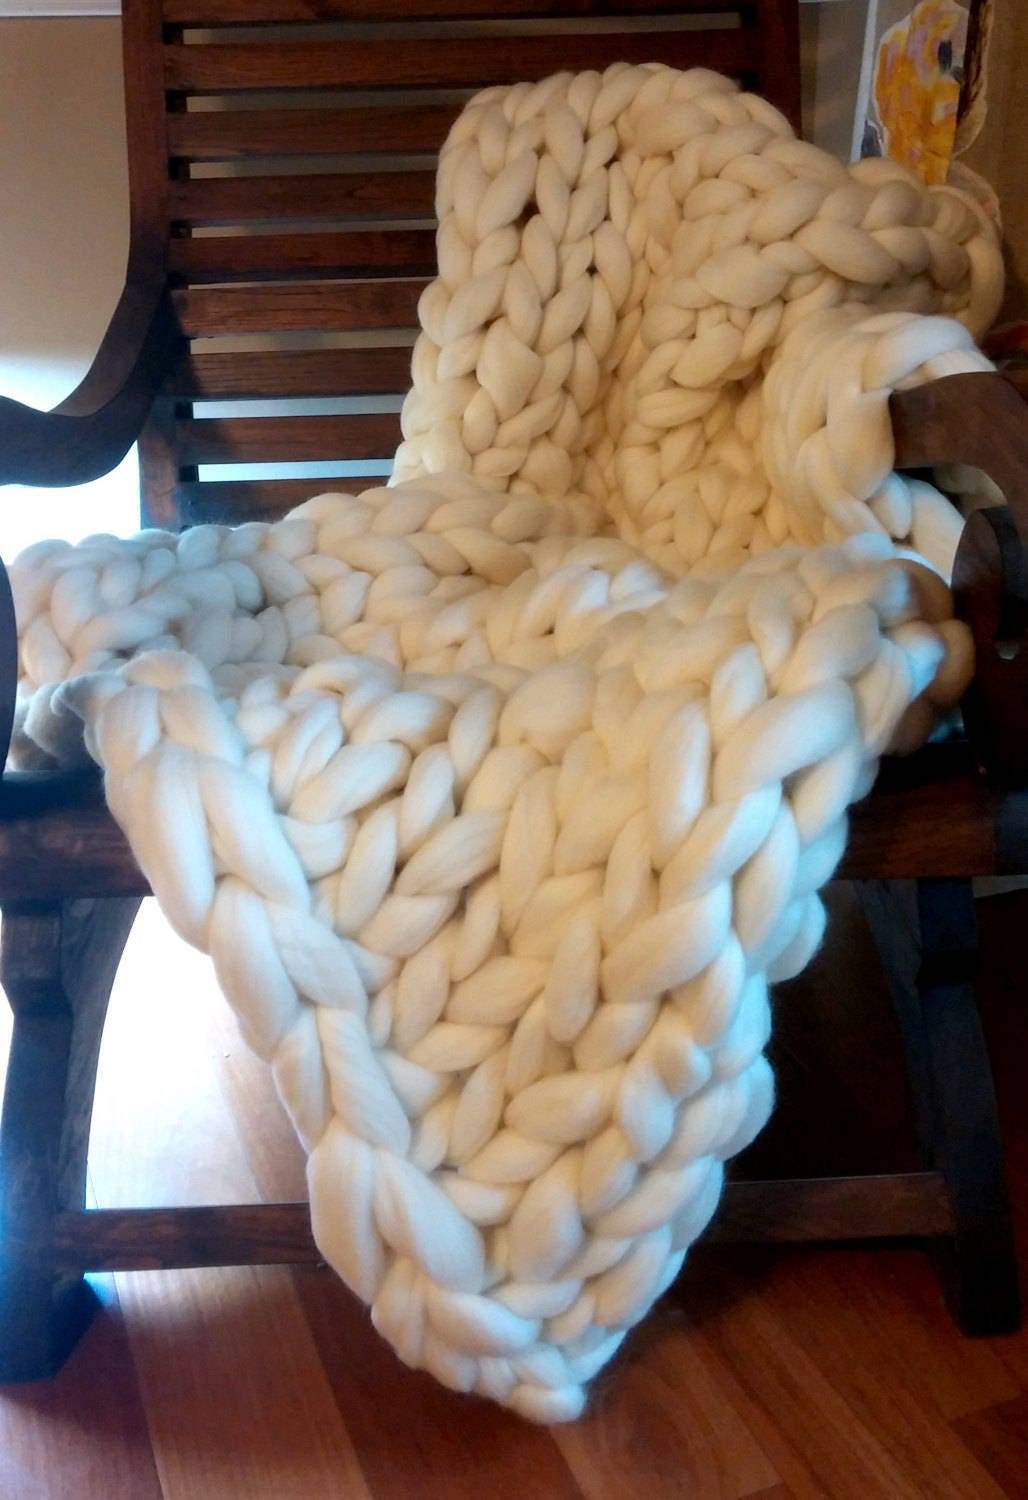 7 Year ANNIVERSARY WOOL- Wedding Gift, Chunky Knit Blanket, Chunky Knit Merino Wool Blanket Large 40" x 60" Throw Blanket